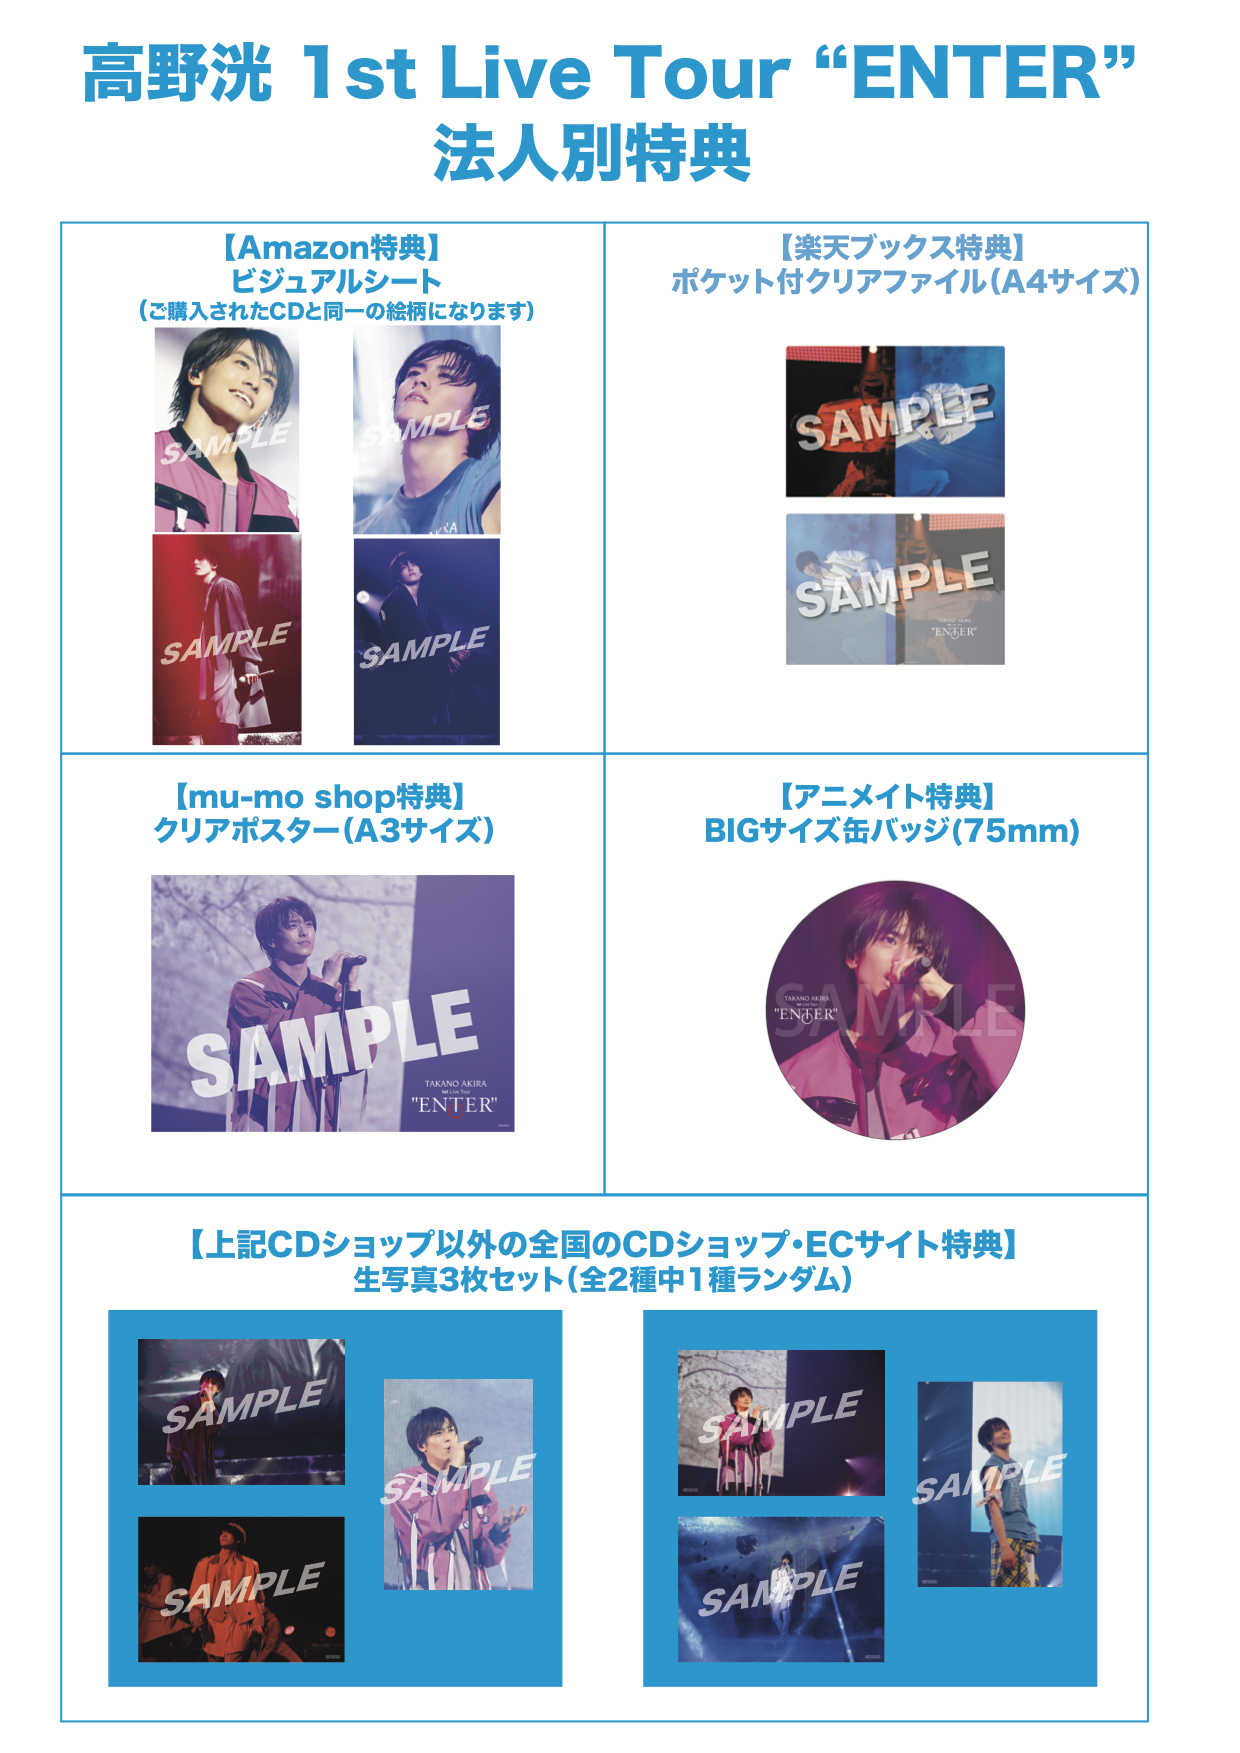 10/27（水）発売「高野洸 1st Live Tour “ENTER”」DVD&Blu-ray CD